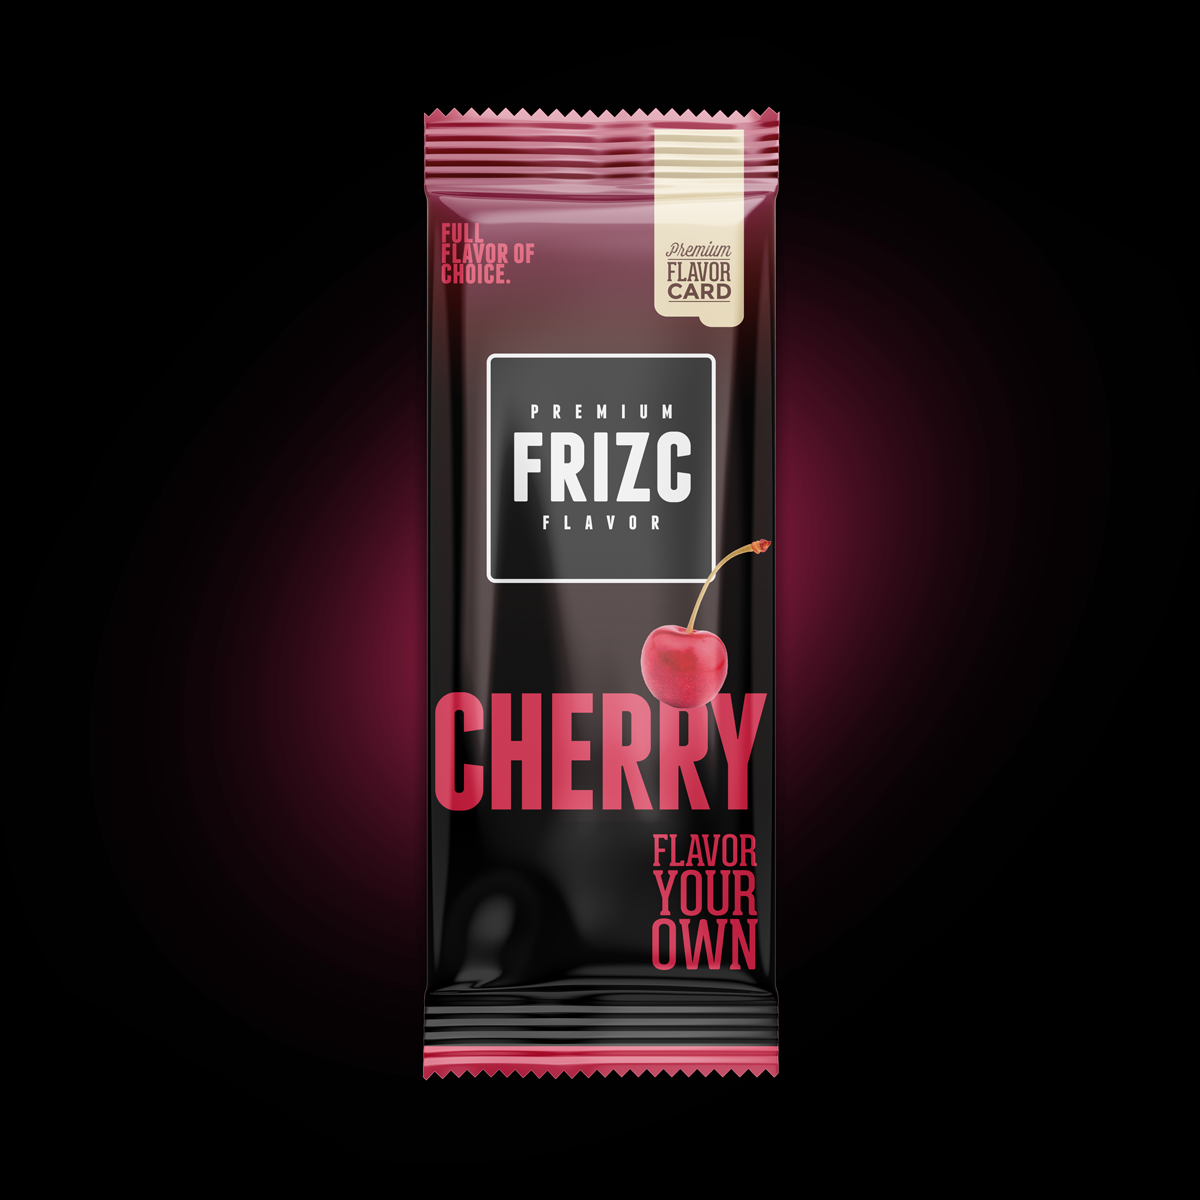 Frizc Cherry 25 pack.